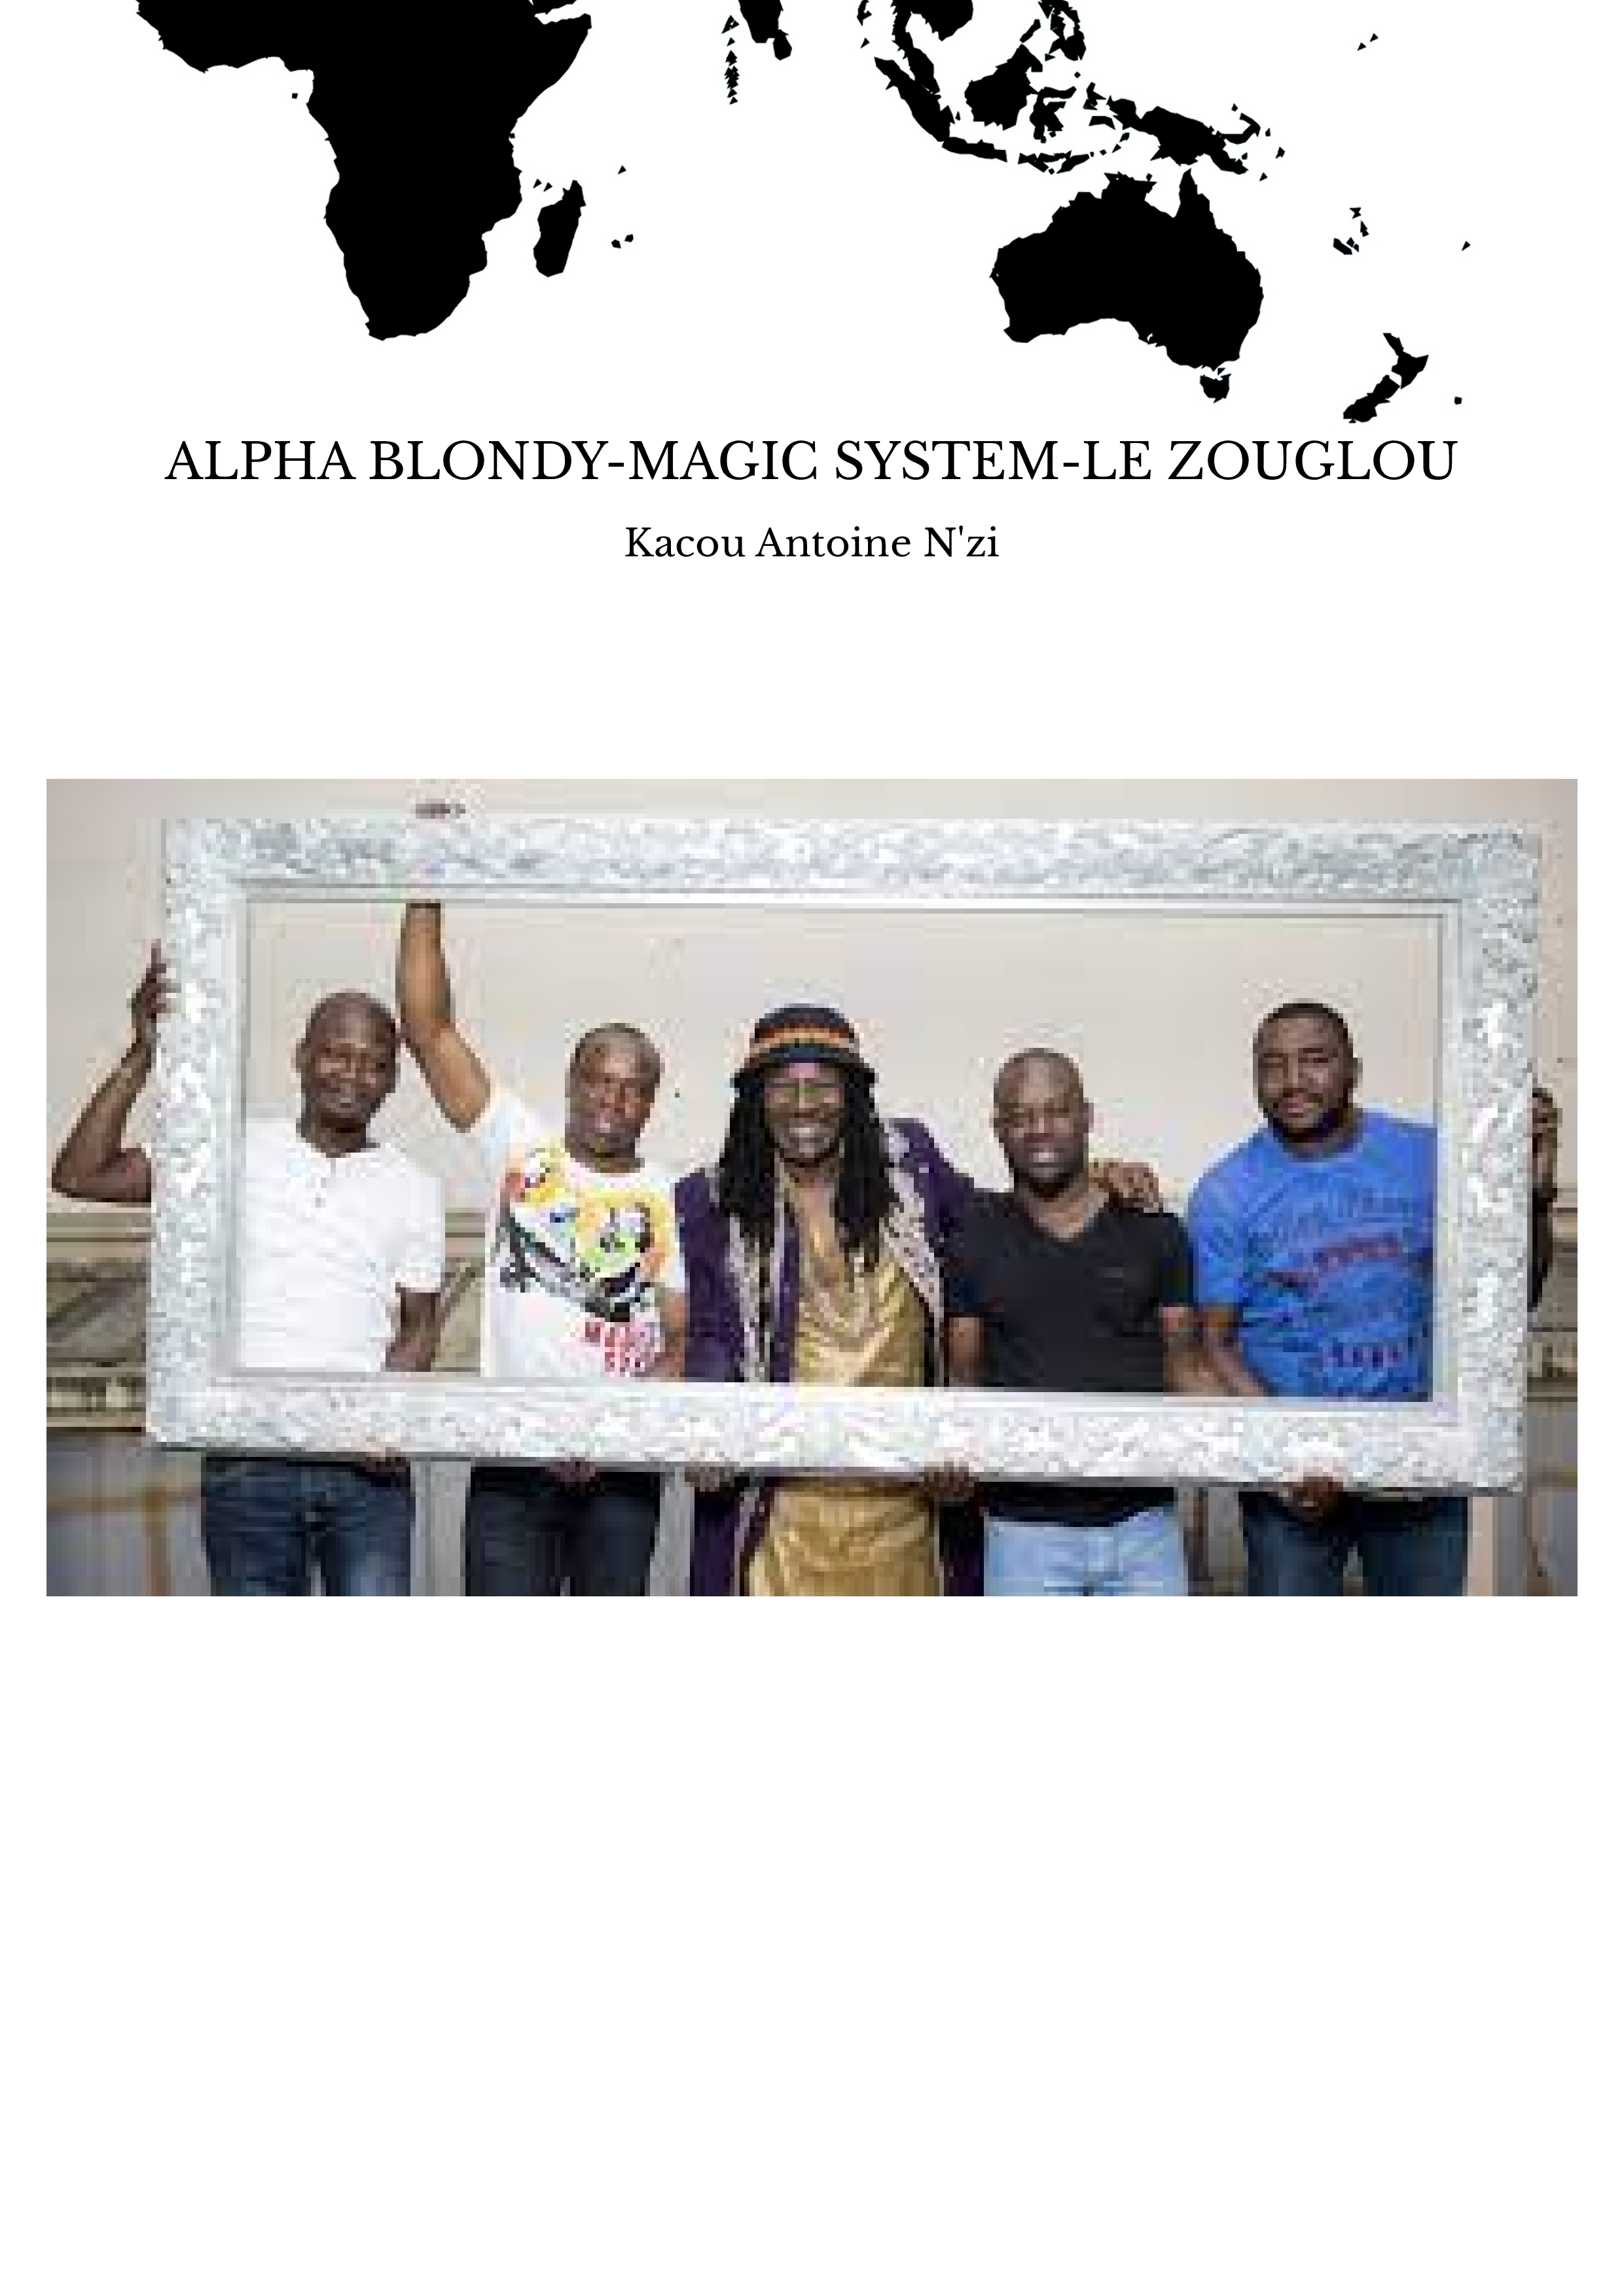 ALPHA BLONDY-MAGIC SYSTEM-LE ZOUGLOU